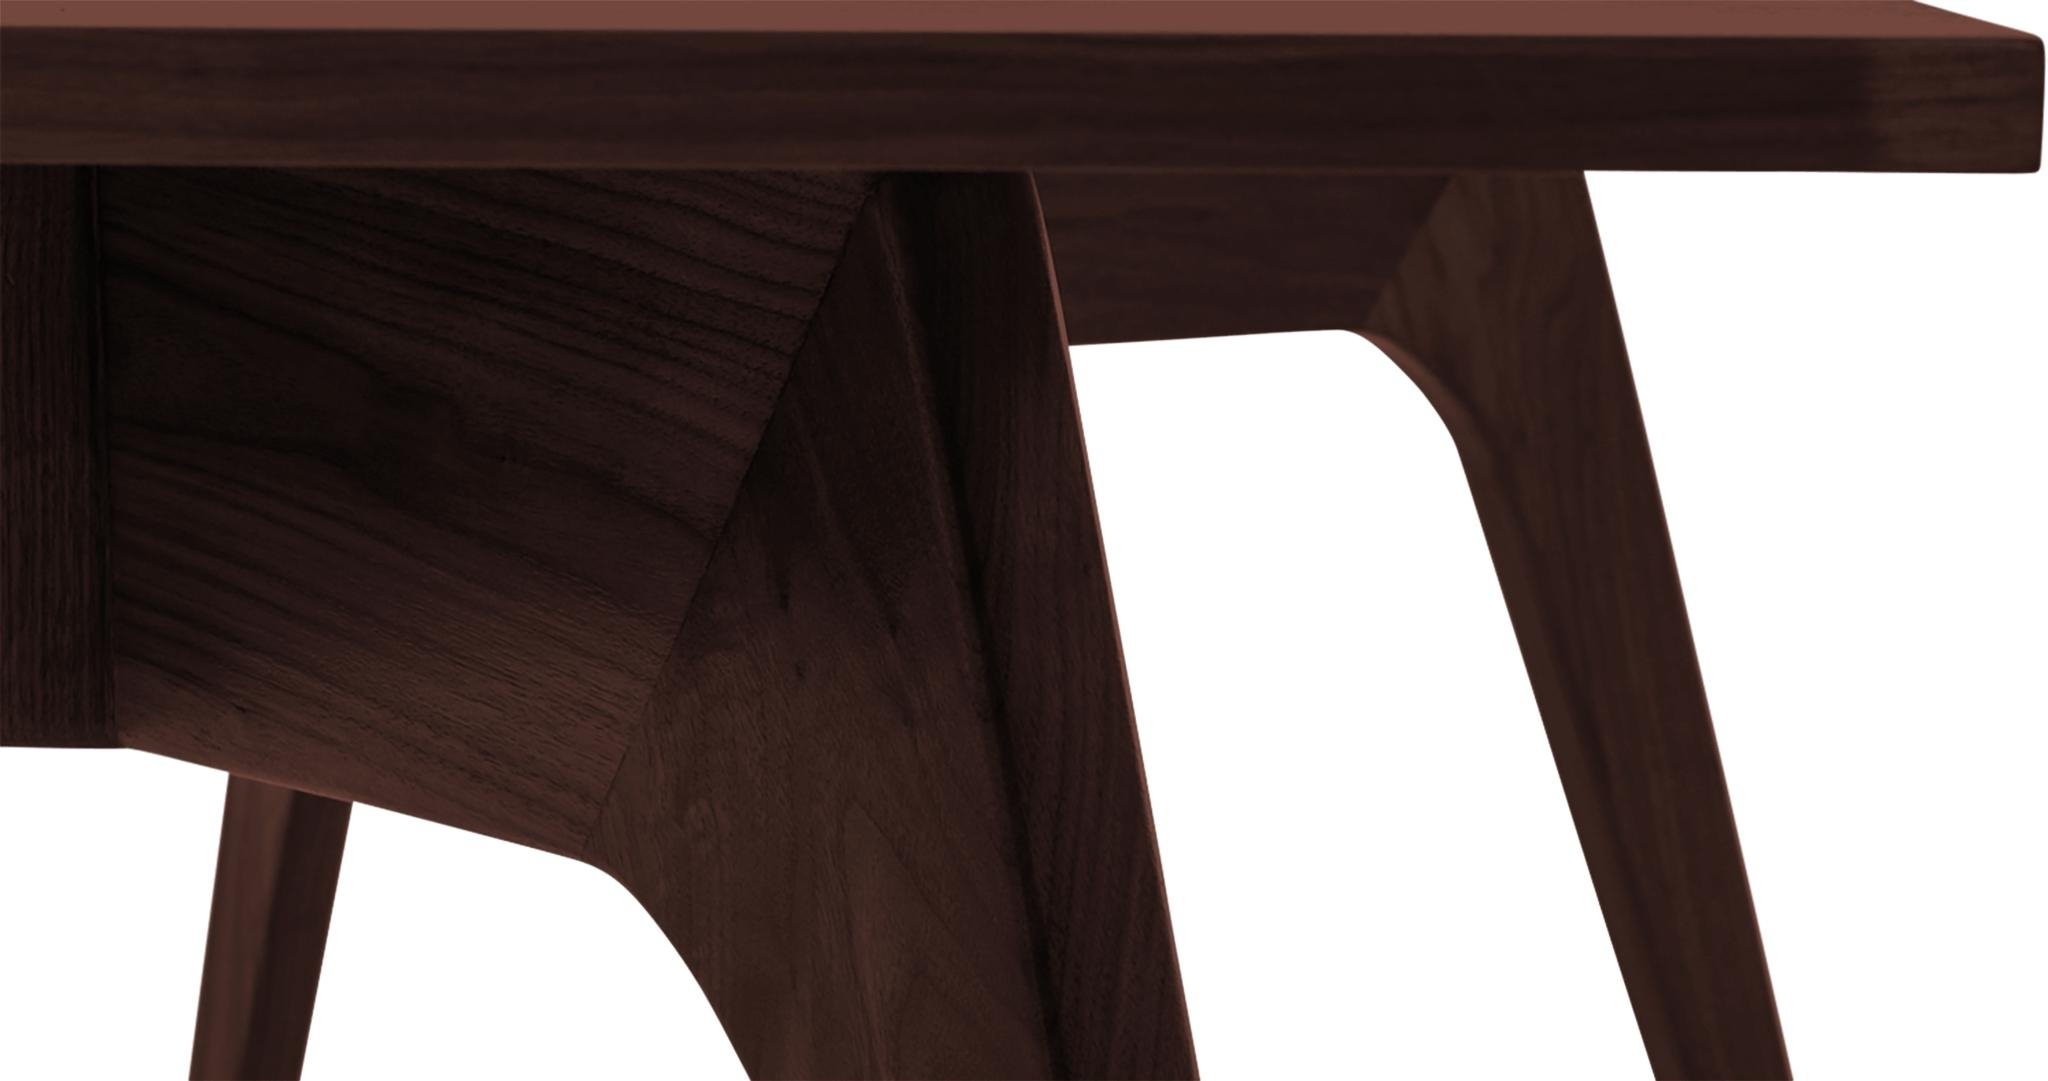 Hesse Mid Century Modern (Wood Top) Dining Table - Walnut - Image 4